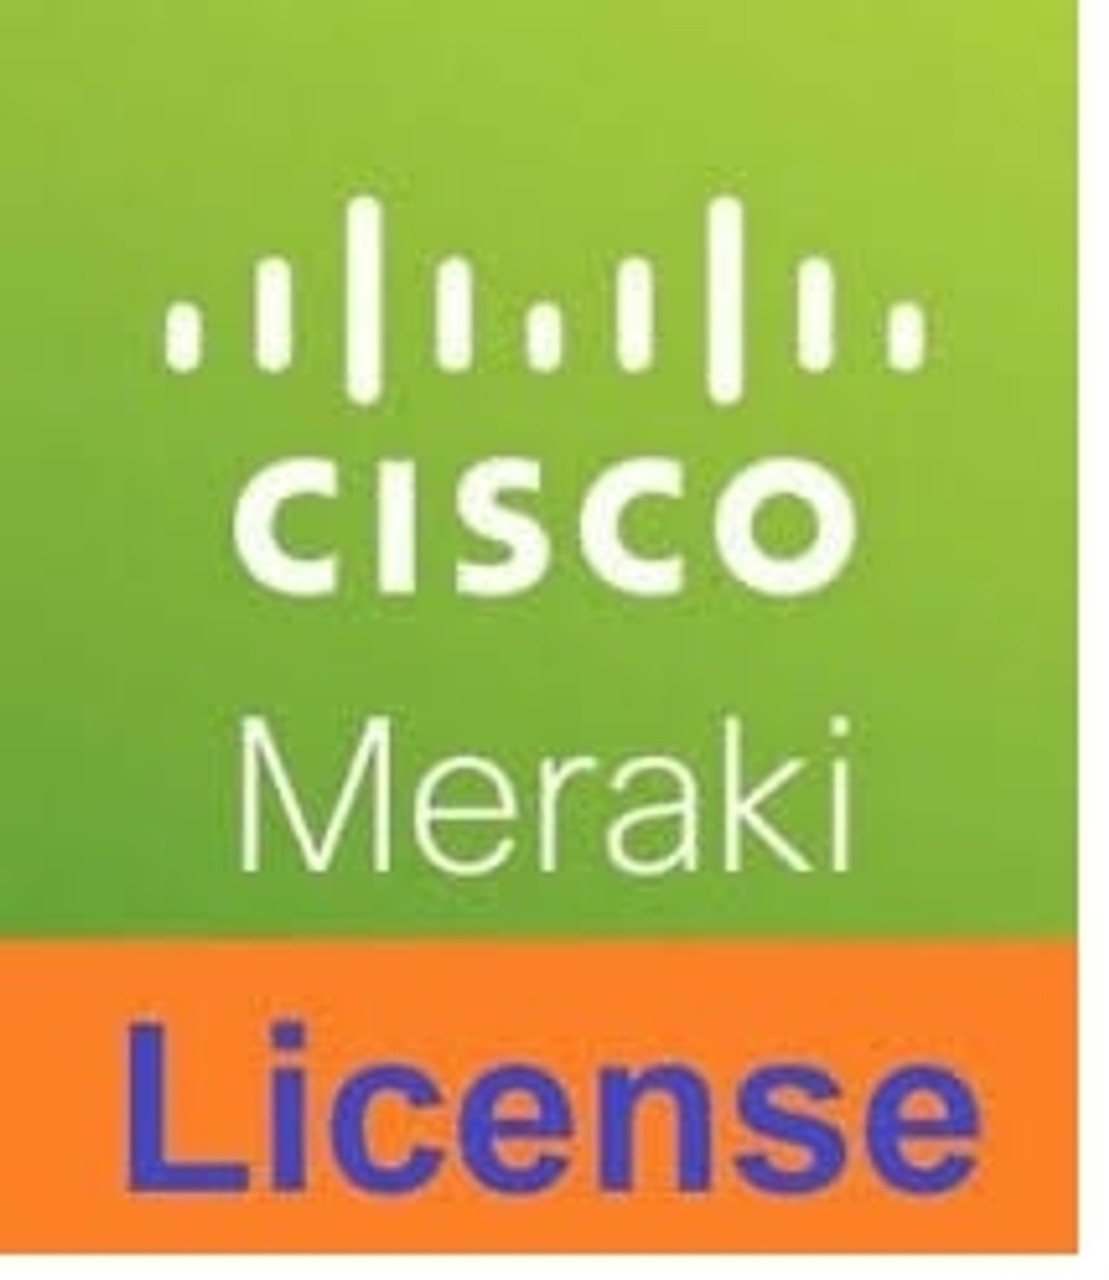 Meraki MS210-48 Enterprise License and Support, 5 Year